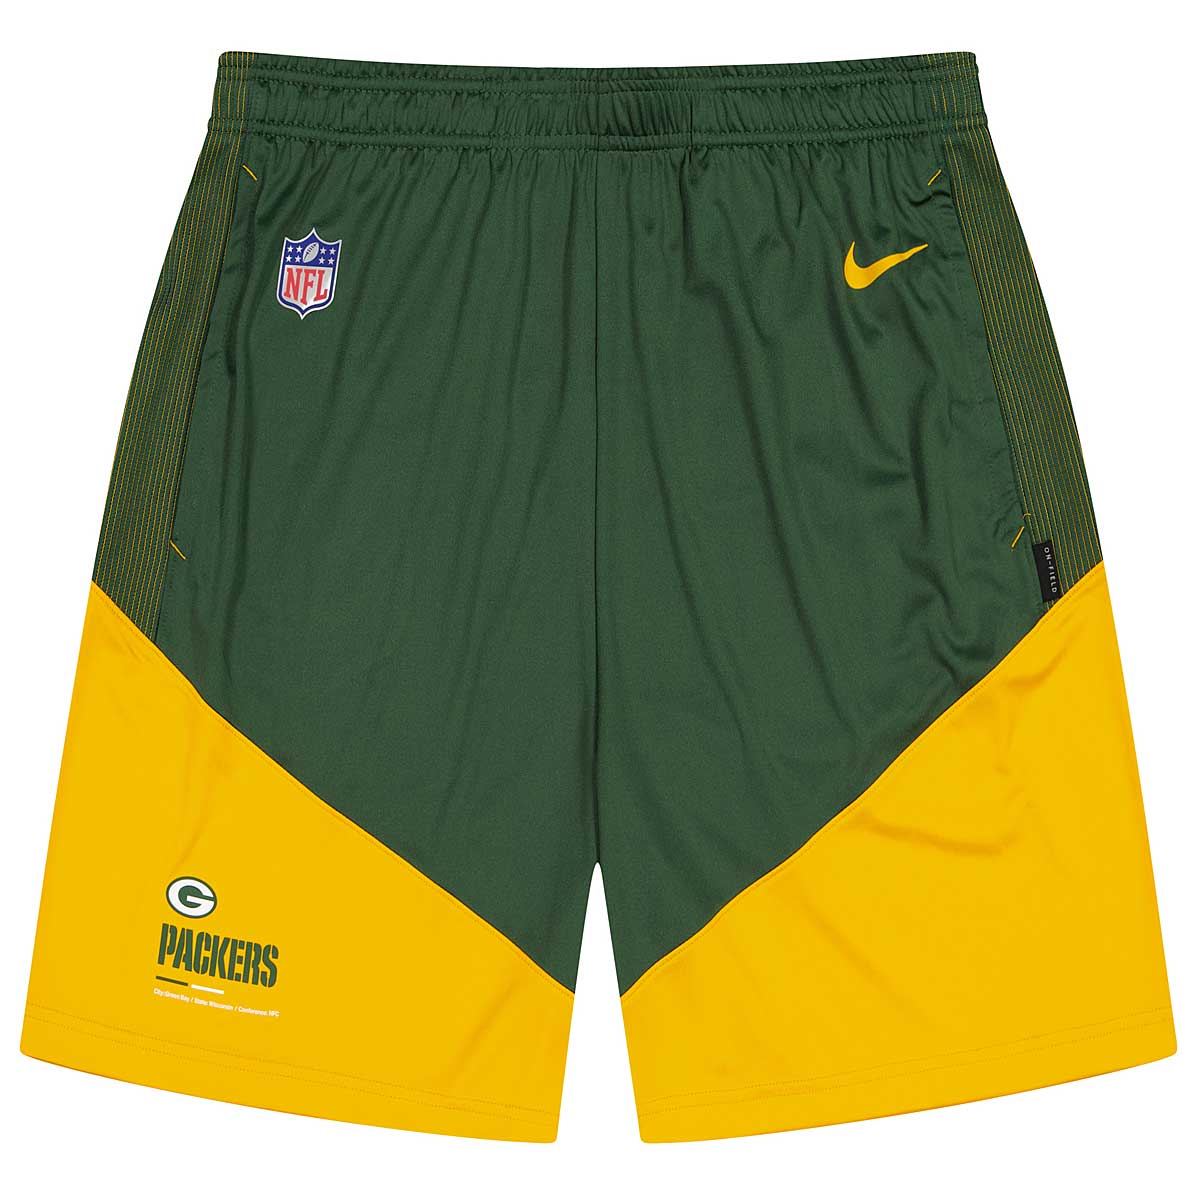 Nike Nfl Green Bay Packers Dri-Fit Knit Shorts, Fir-University Gold-Fir Green Bay Packers